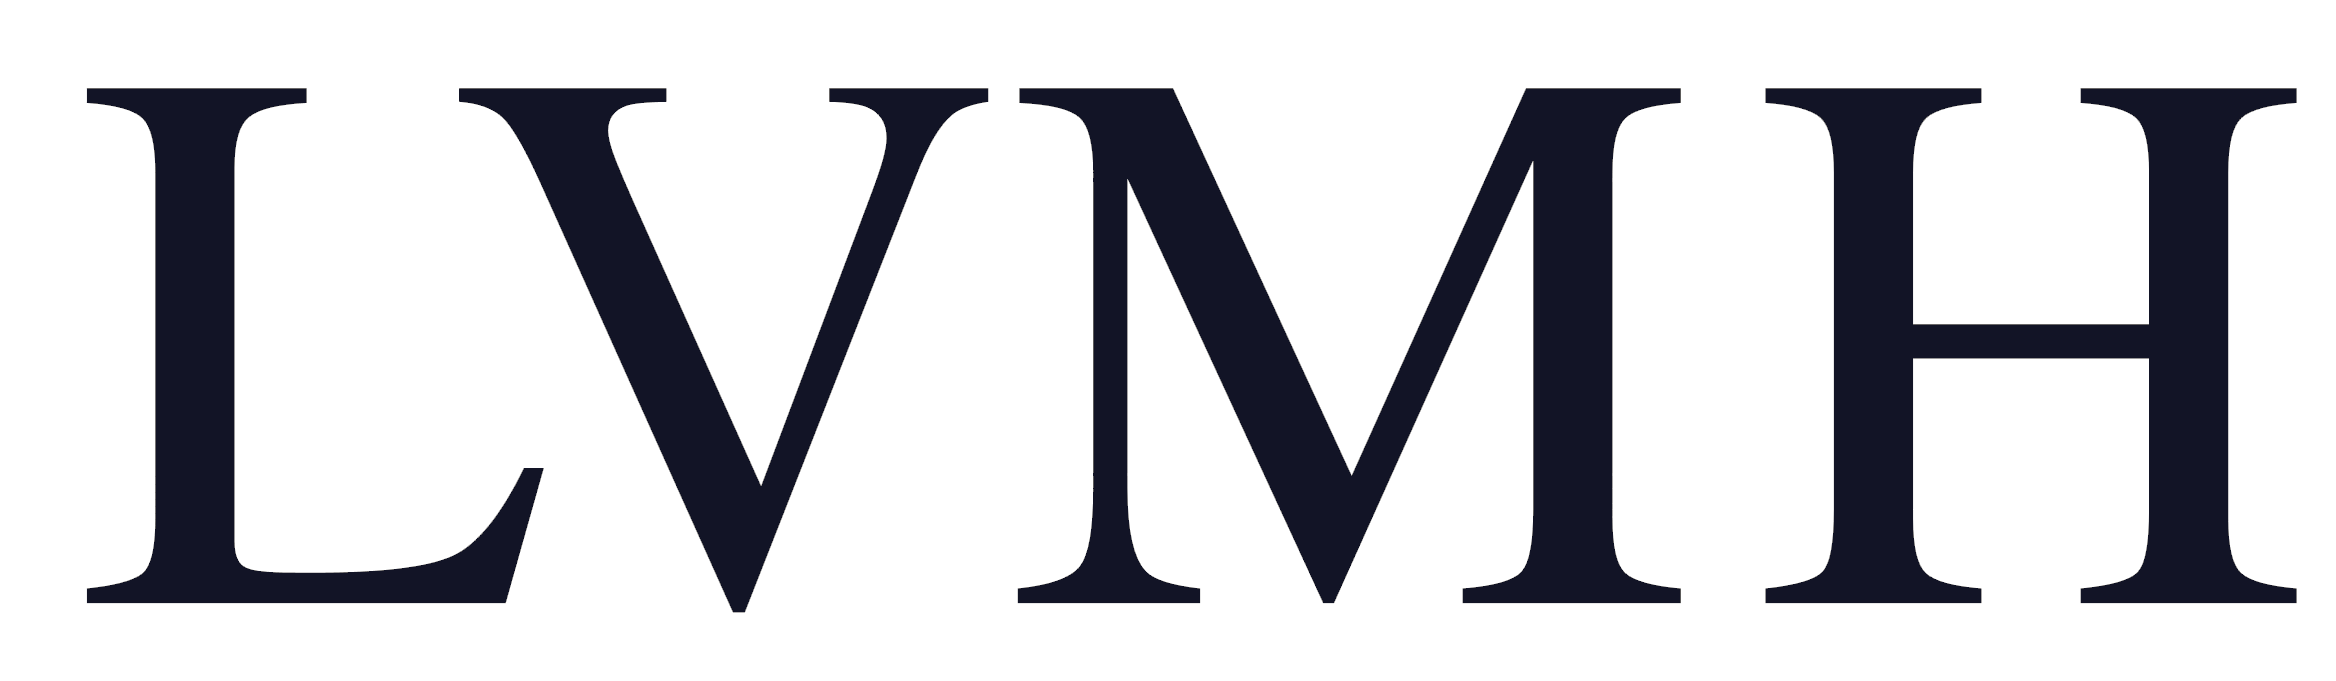 LVMH, Logo, White background Stock Photo - Alamy